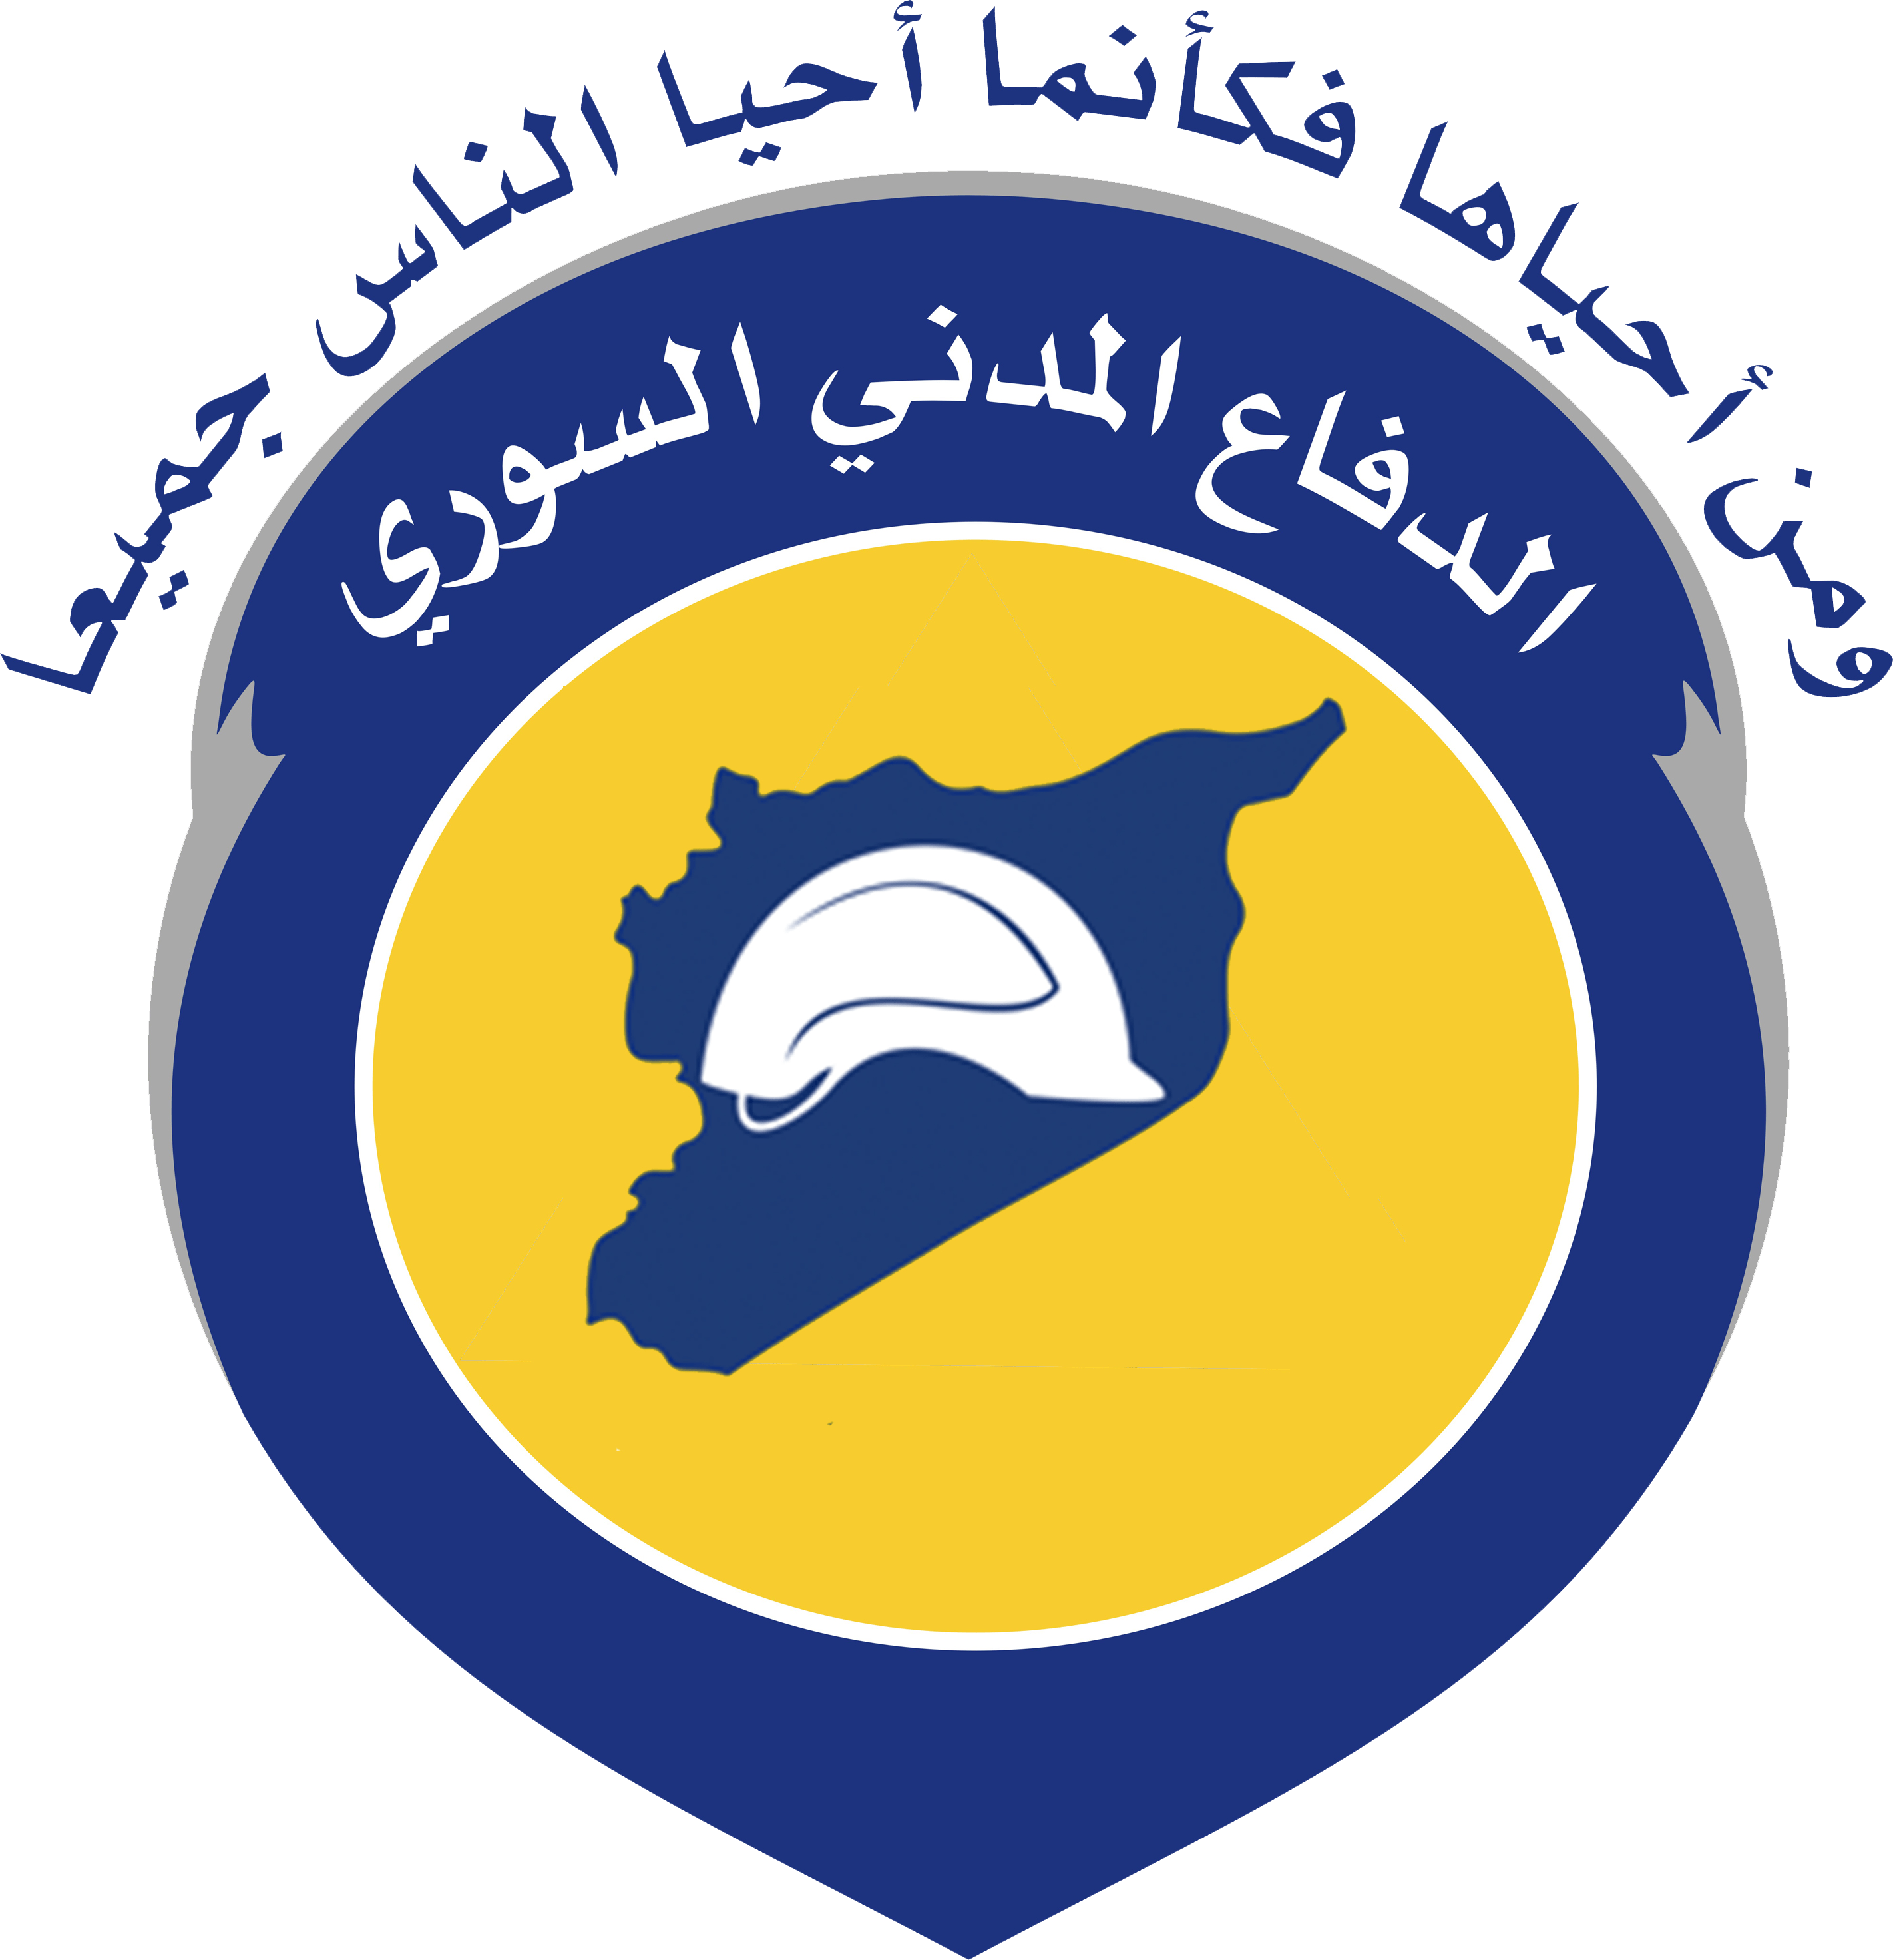 Syria Logo - White Helmets (Syrian Civil War)